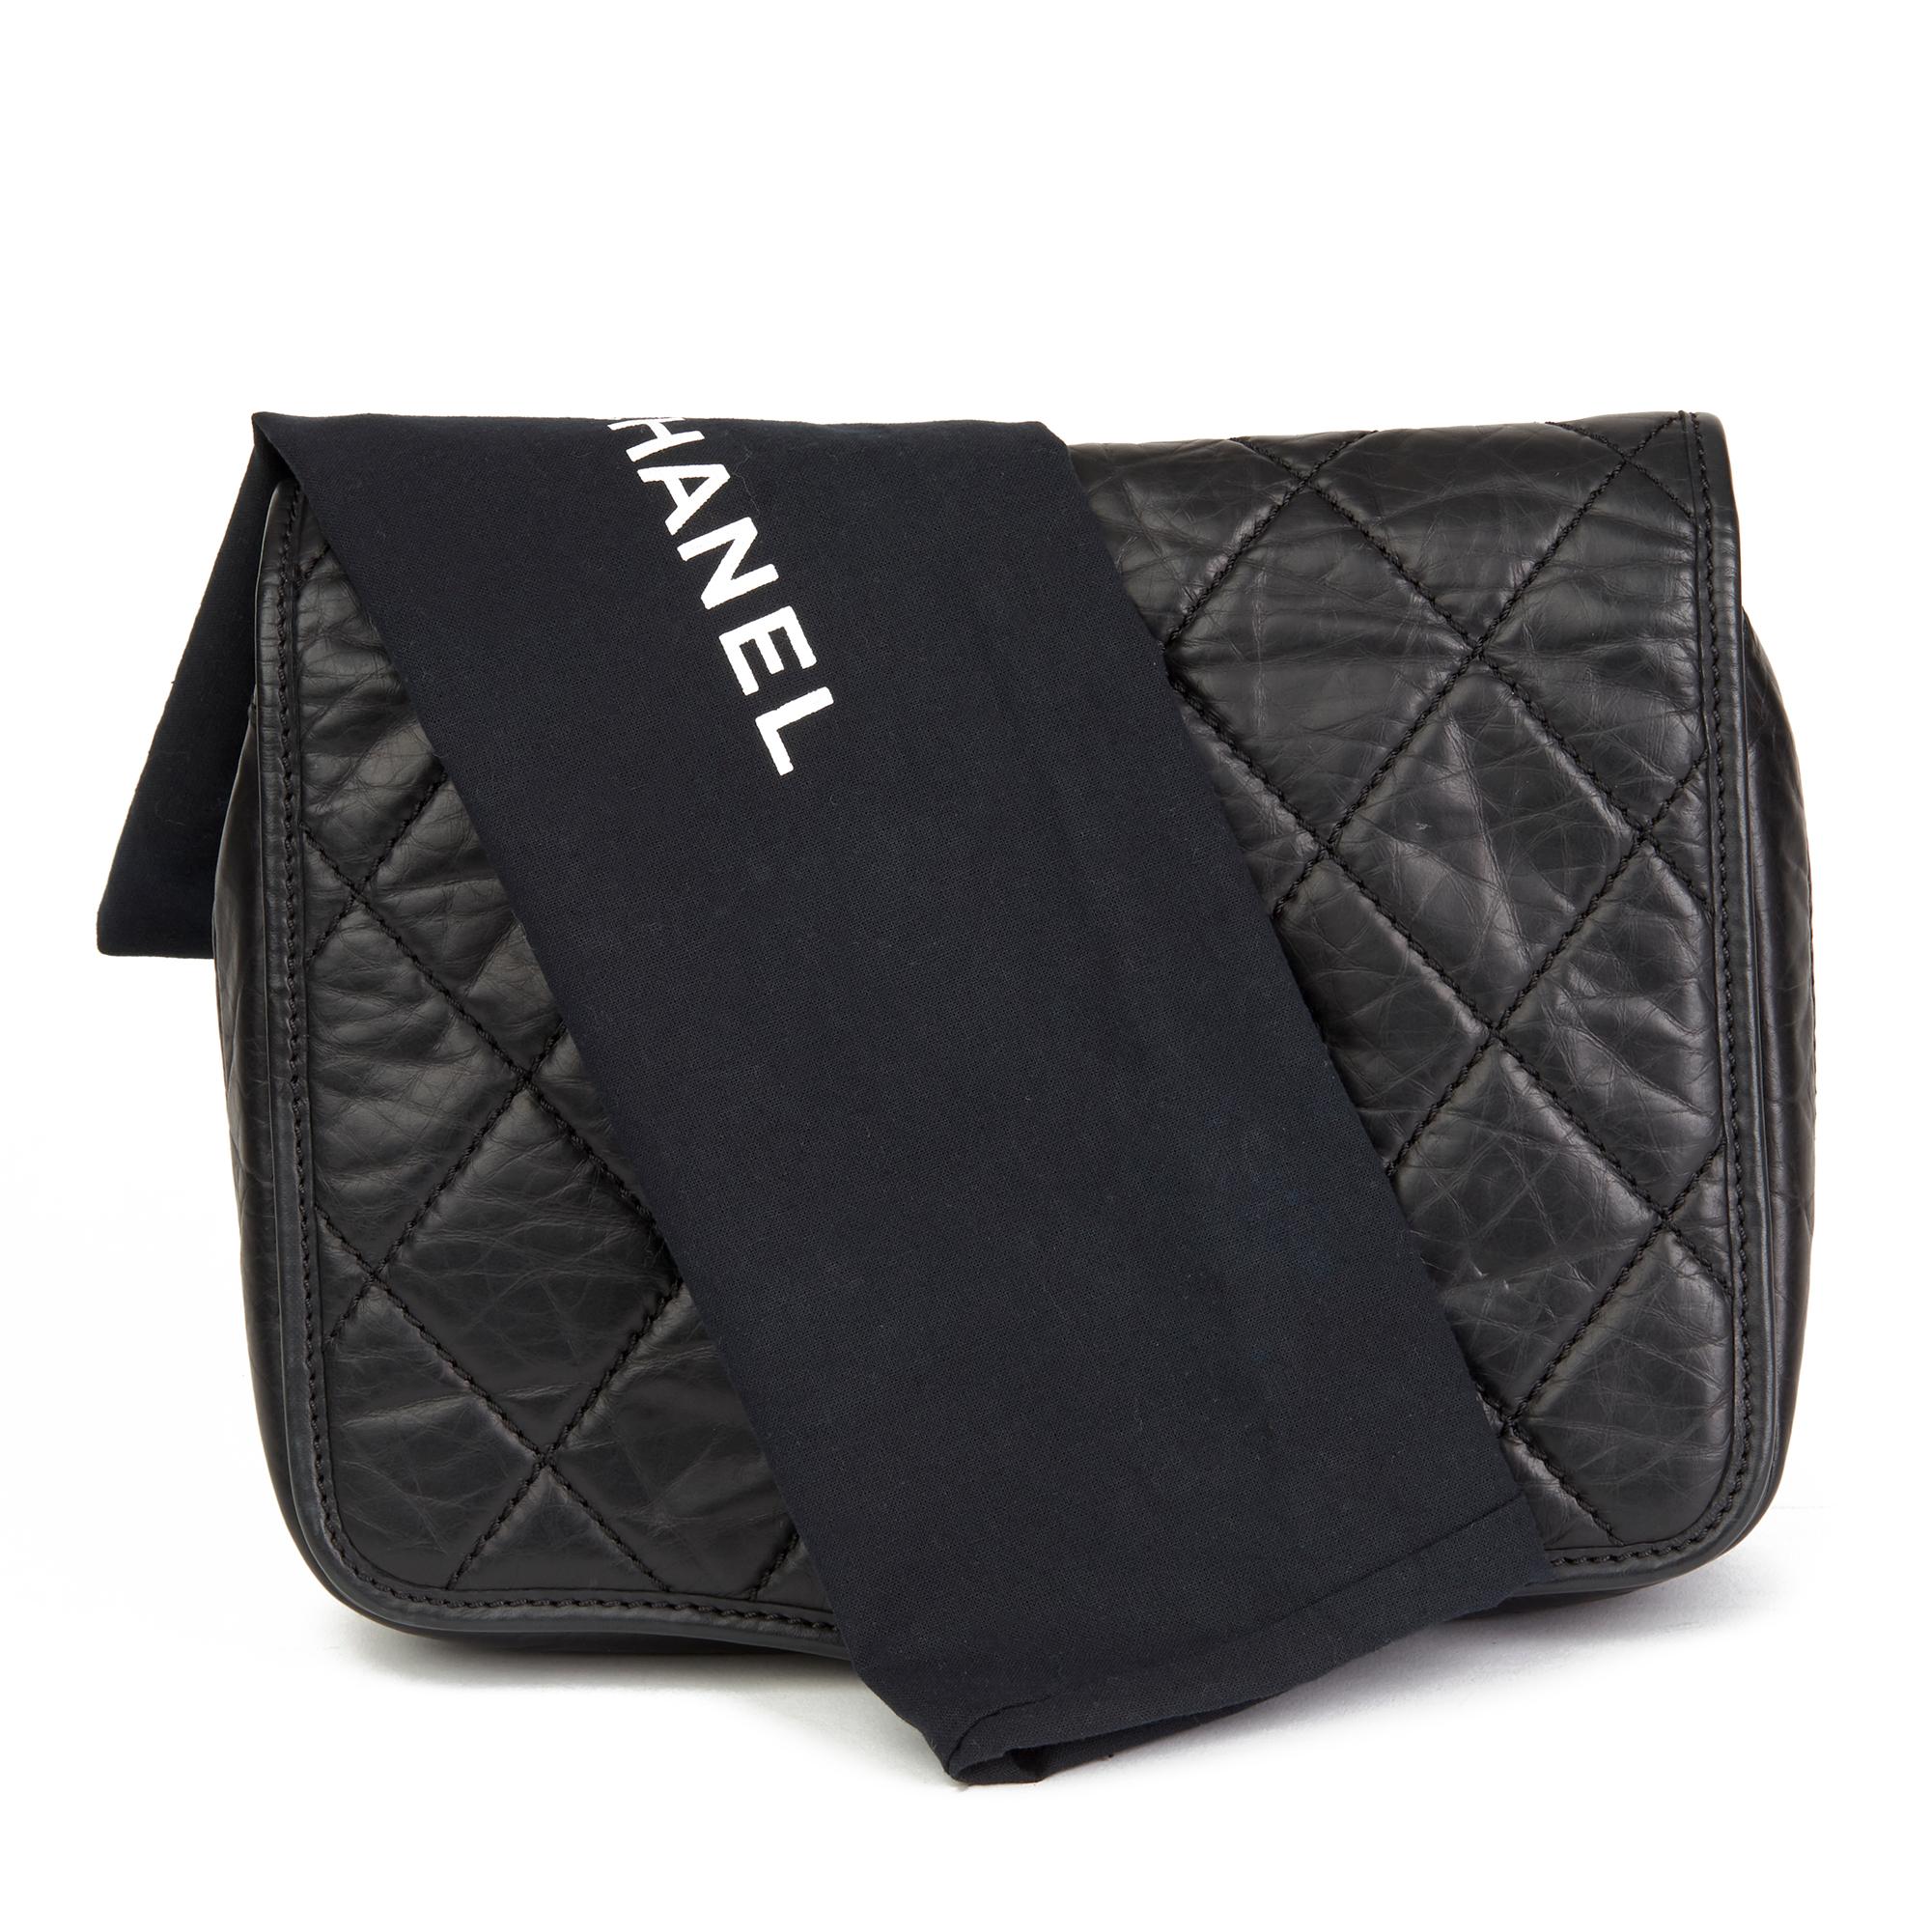 2005 Chanel Black Quilted Aged Calfskin Leather Timeless Messenger Flap Bag 7